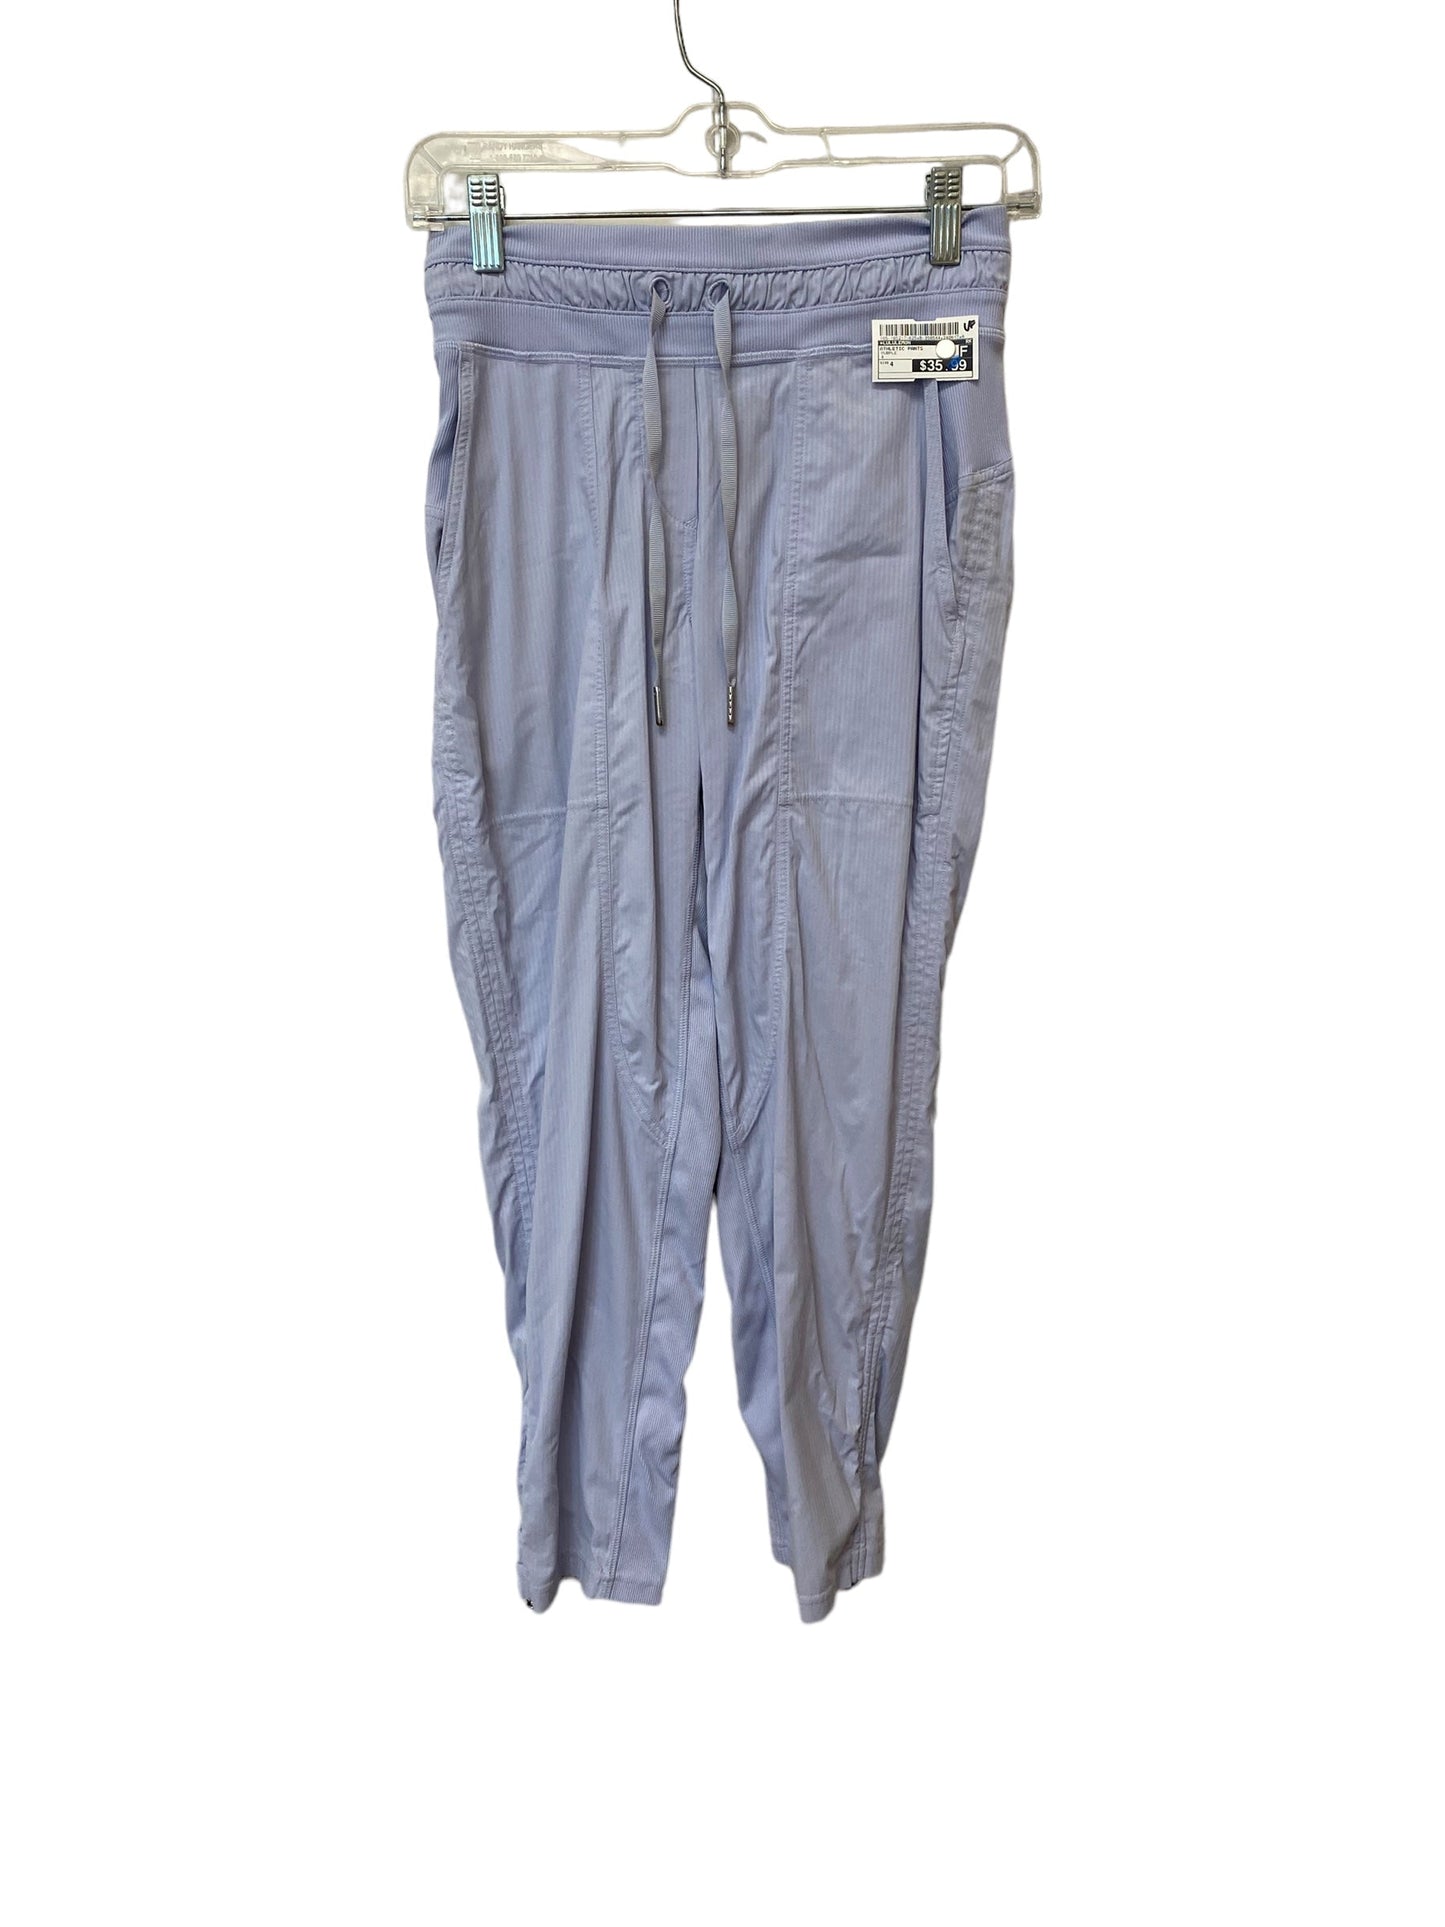 Purple Athletic Pants Lululemon, Size 4